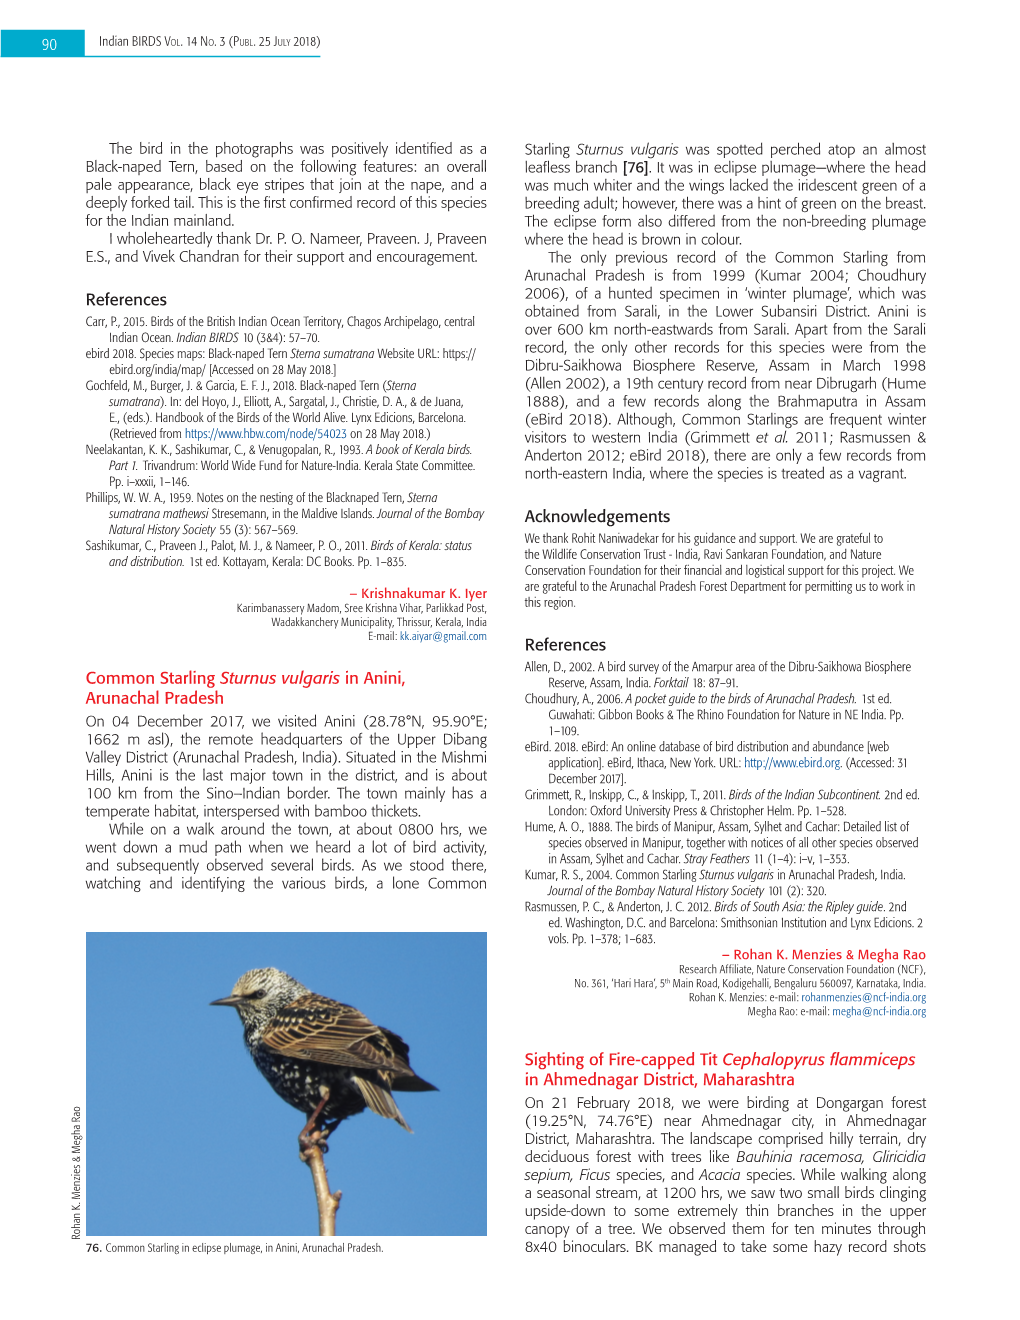 References Common Starling Sturnus Vulgaris in Anini, Arunachal